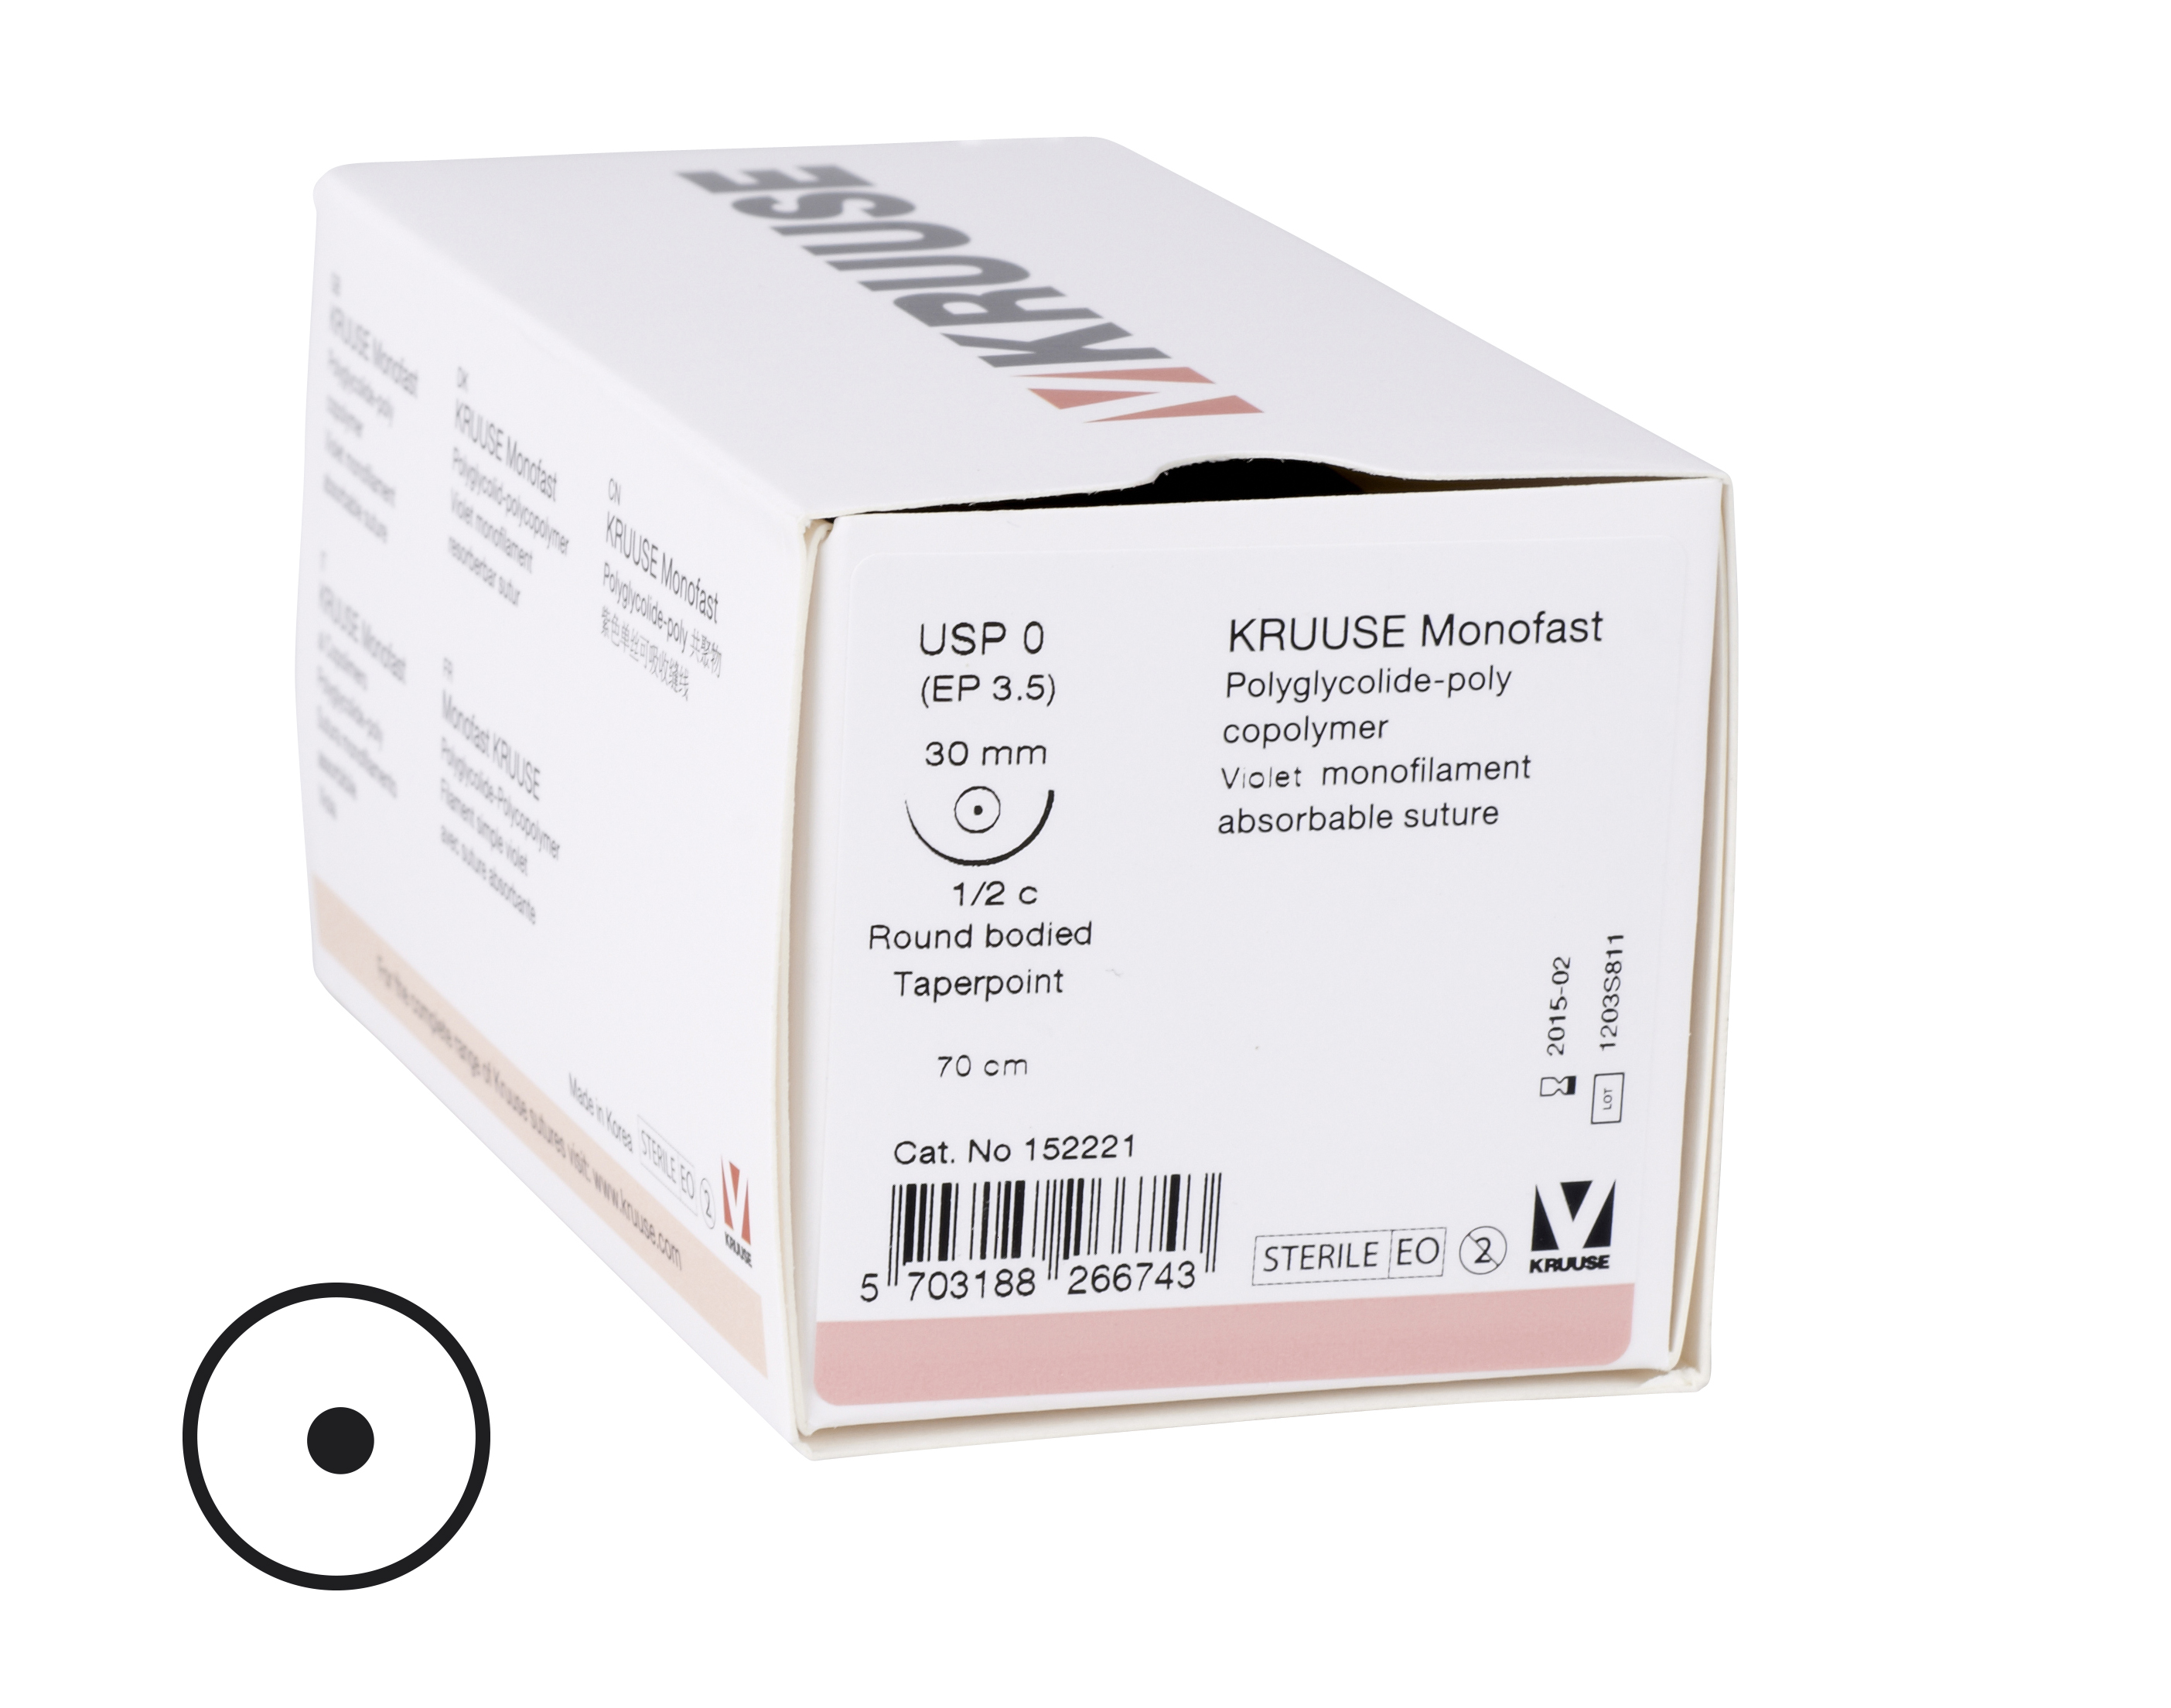 KRUUSE Monofast Suture, USP 0, 70 cm, needle: 30 mm, round bodied-taper point, 1/2 circle, 18/pk